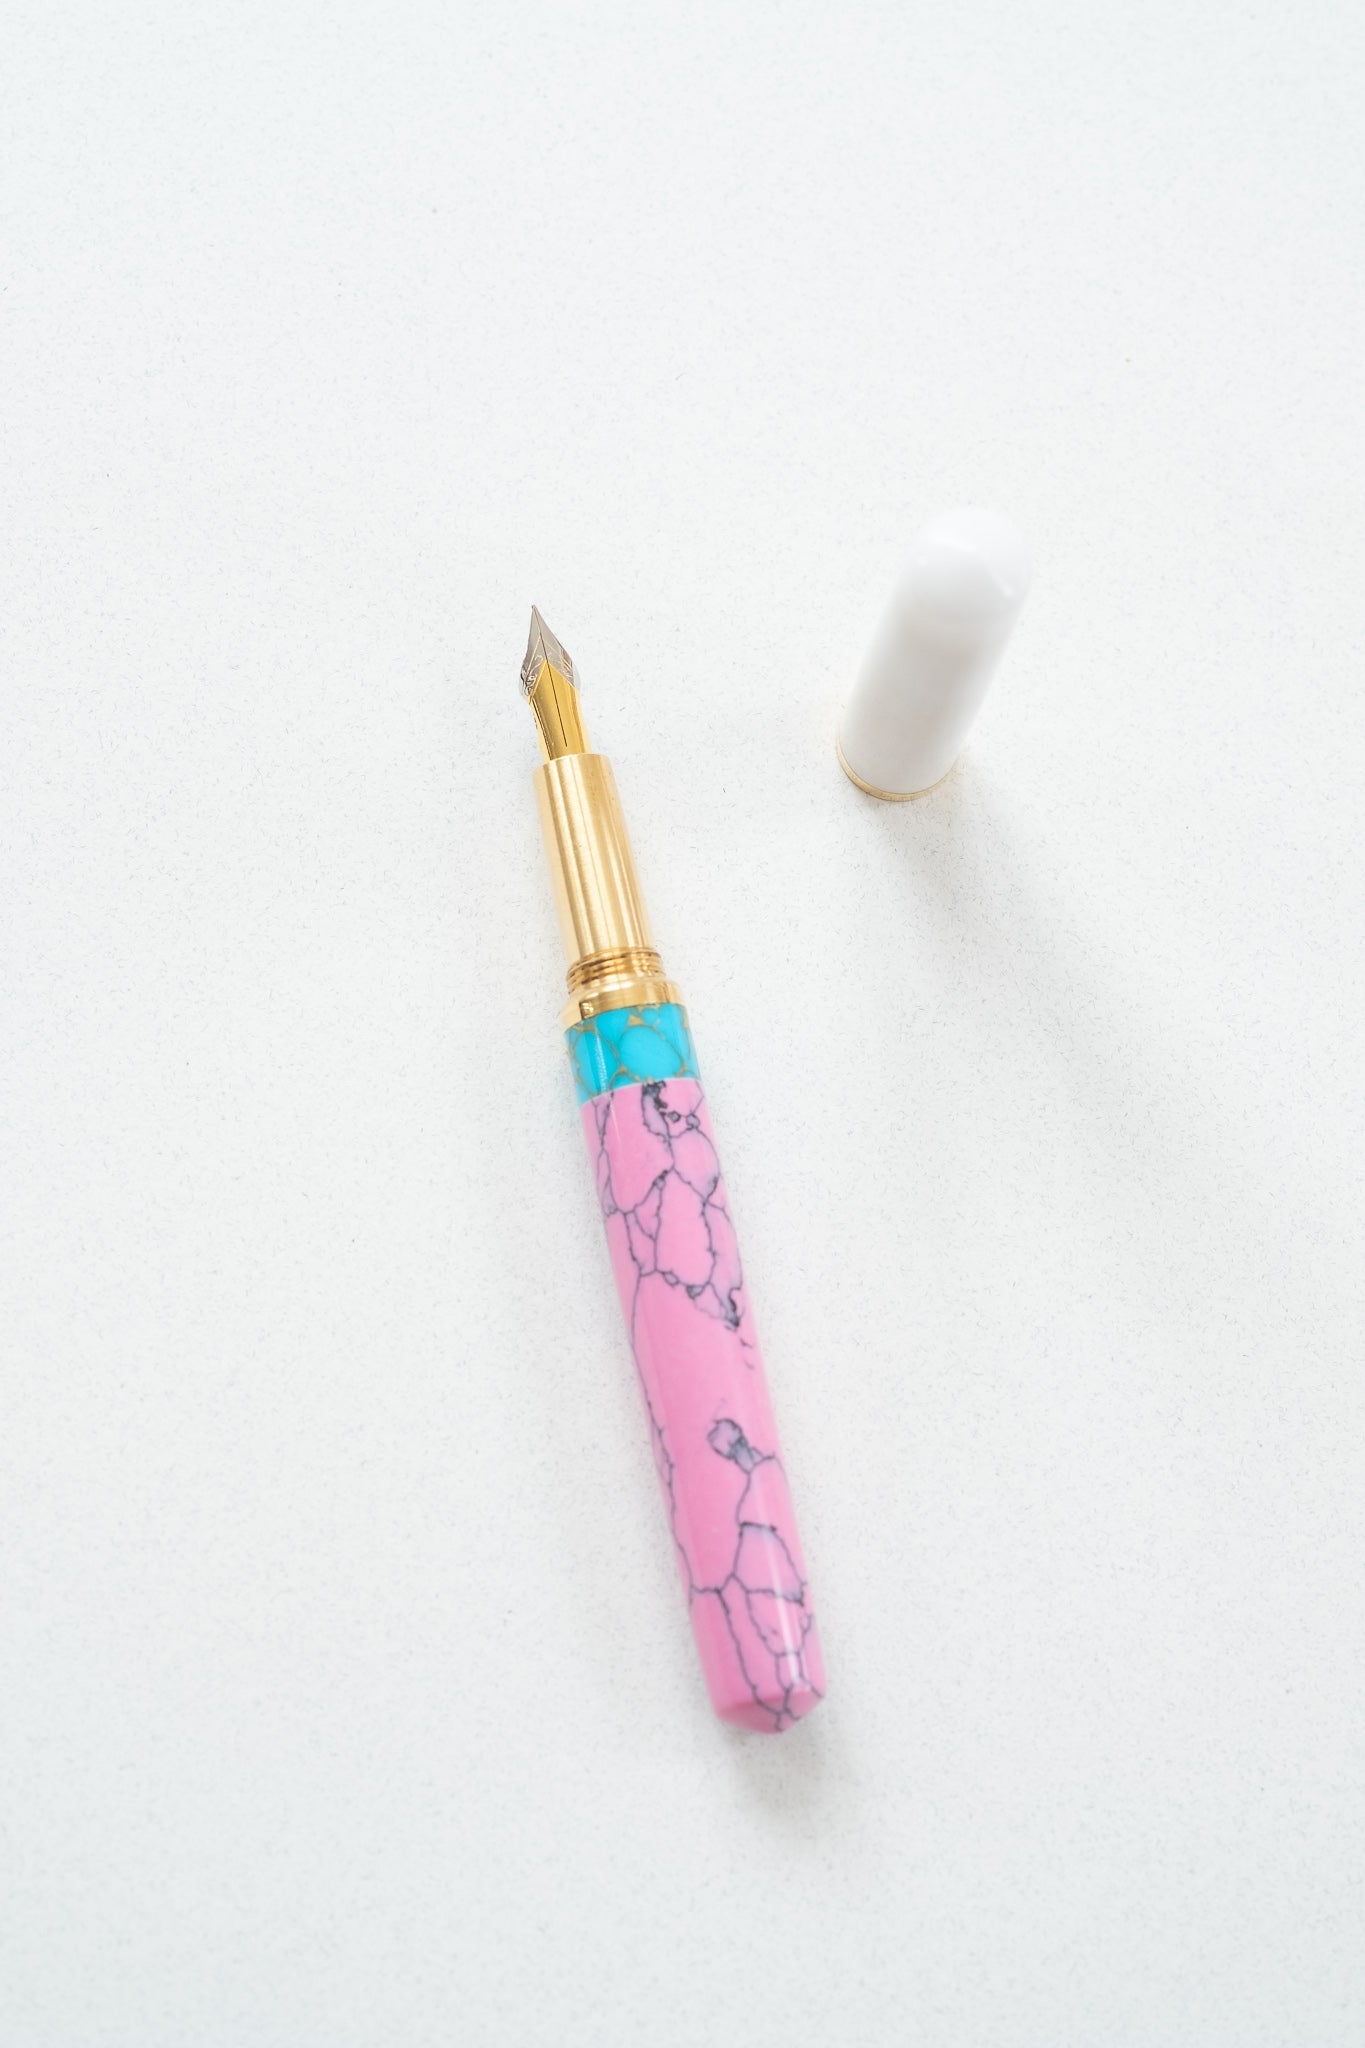 Pink + Turquoise - Studio Fountain pen on a white desk open showing the flexible fountain pen nib